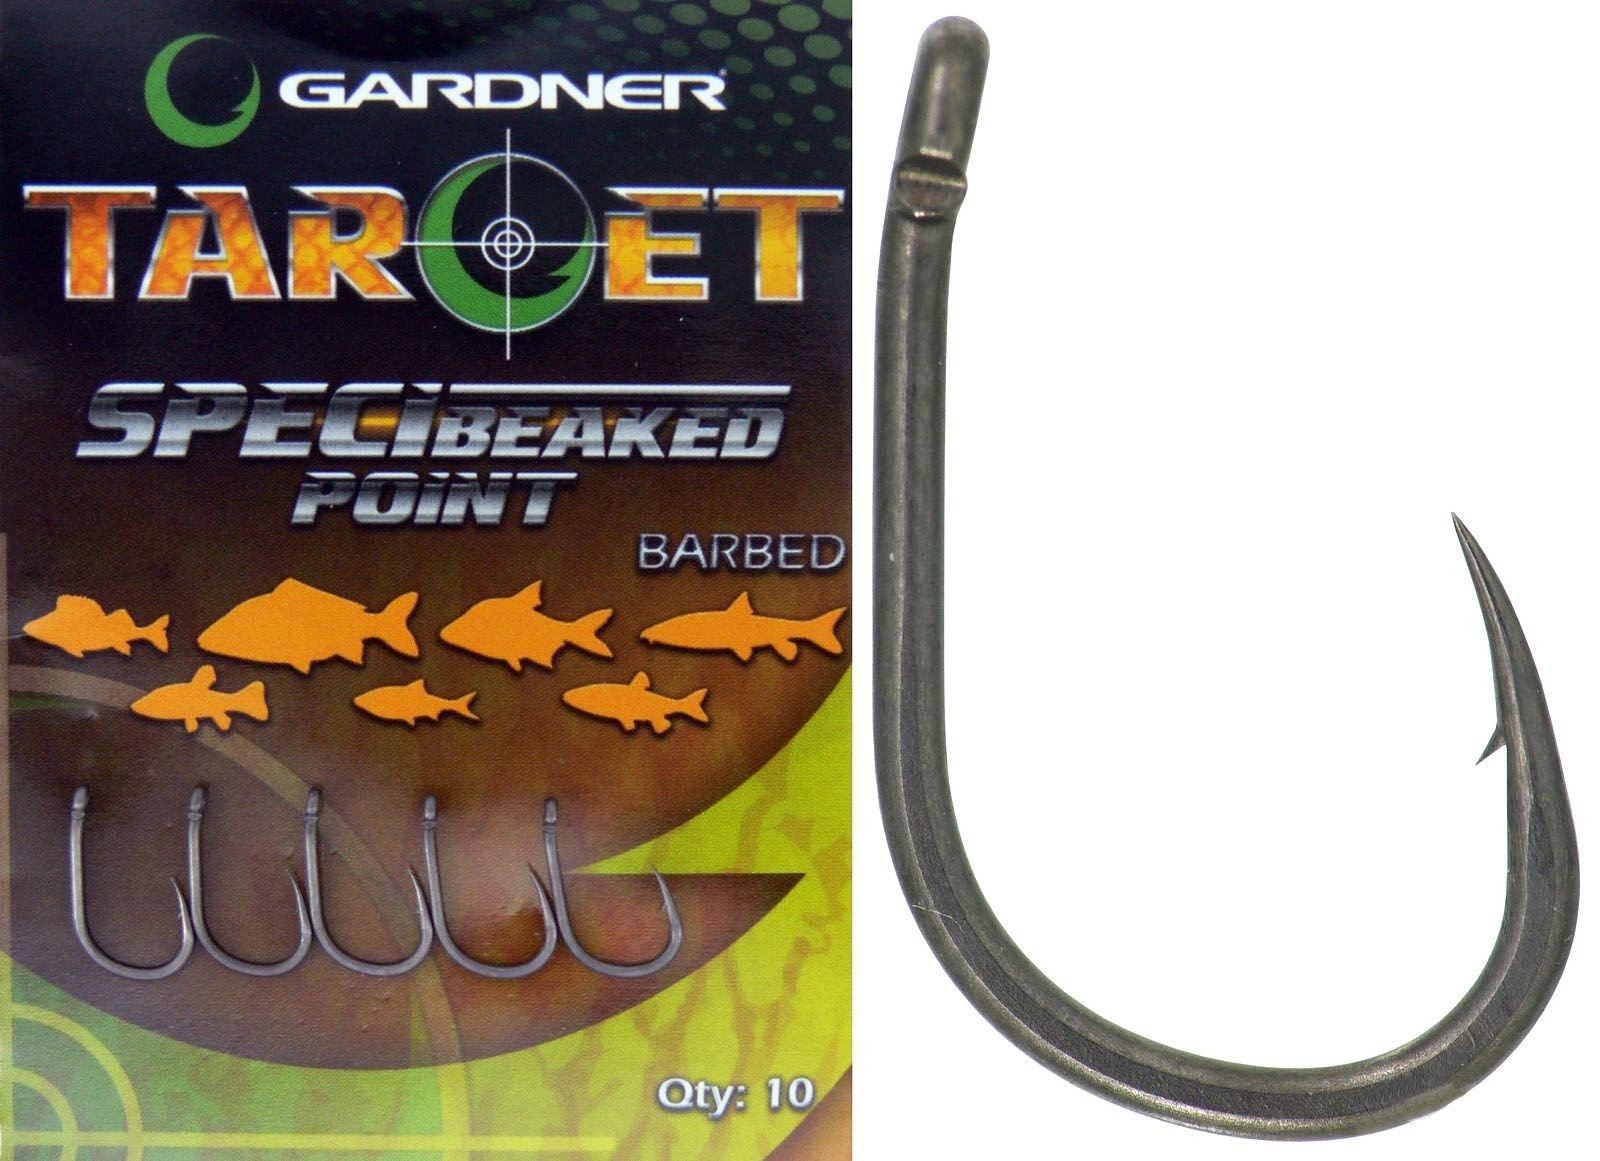 Крючки Gardner Target speci-beaked point barbed №14 - фото 1